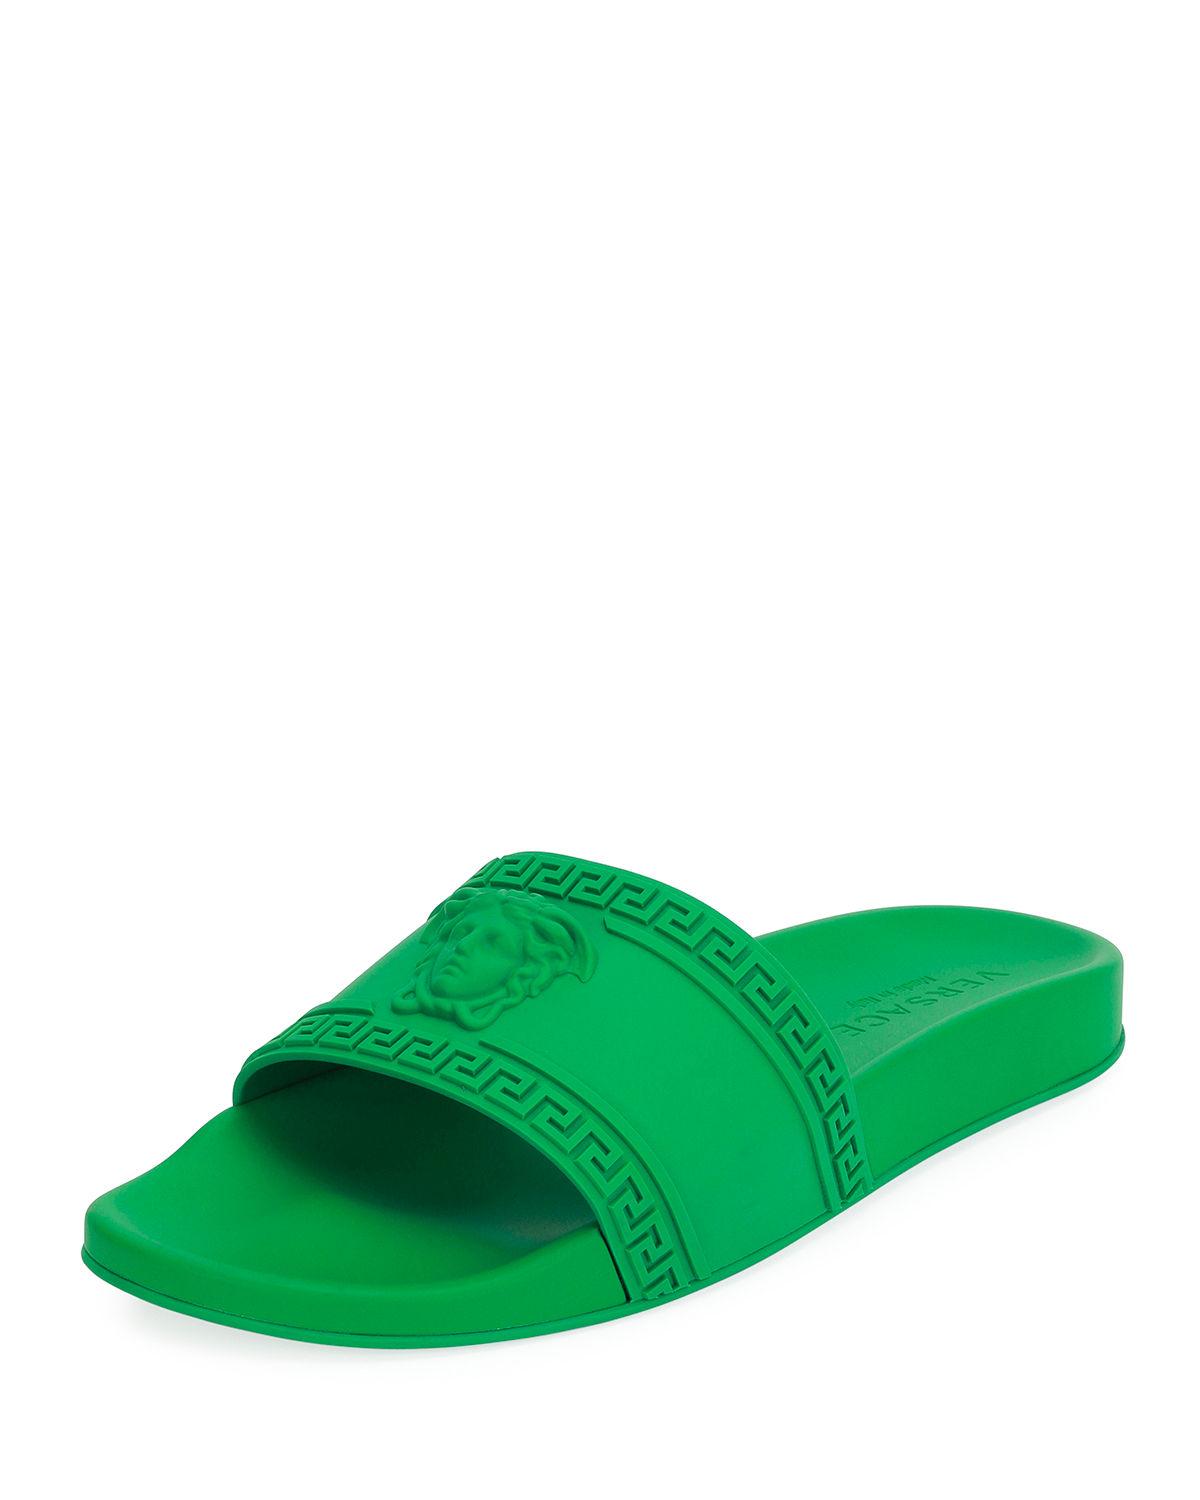 Versace Rubber Medusa Cardinal Slide Sandals in Green for Men - Lyst